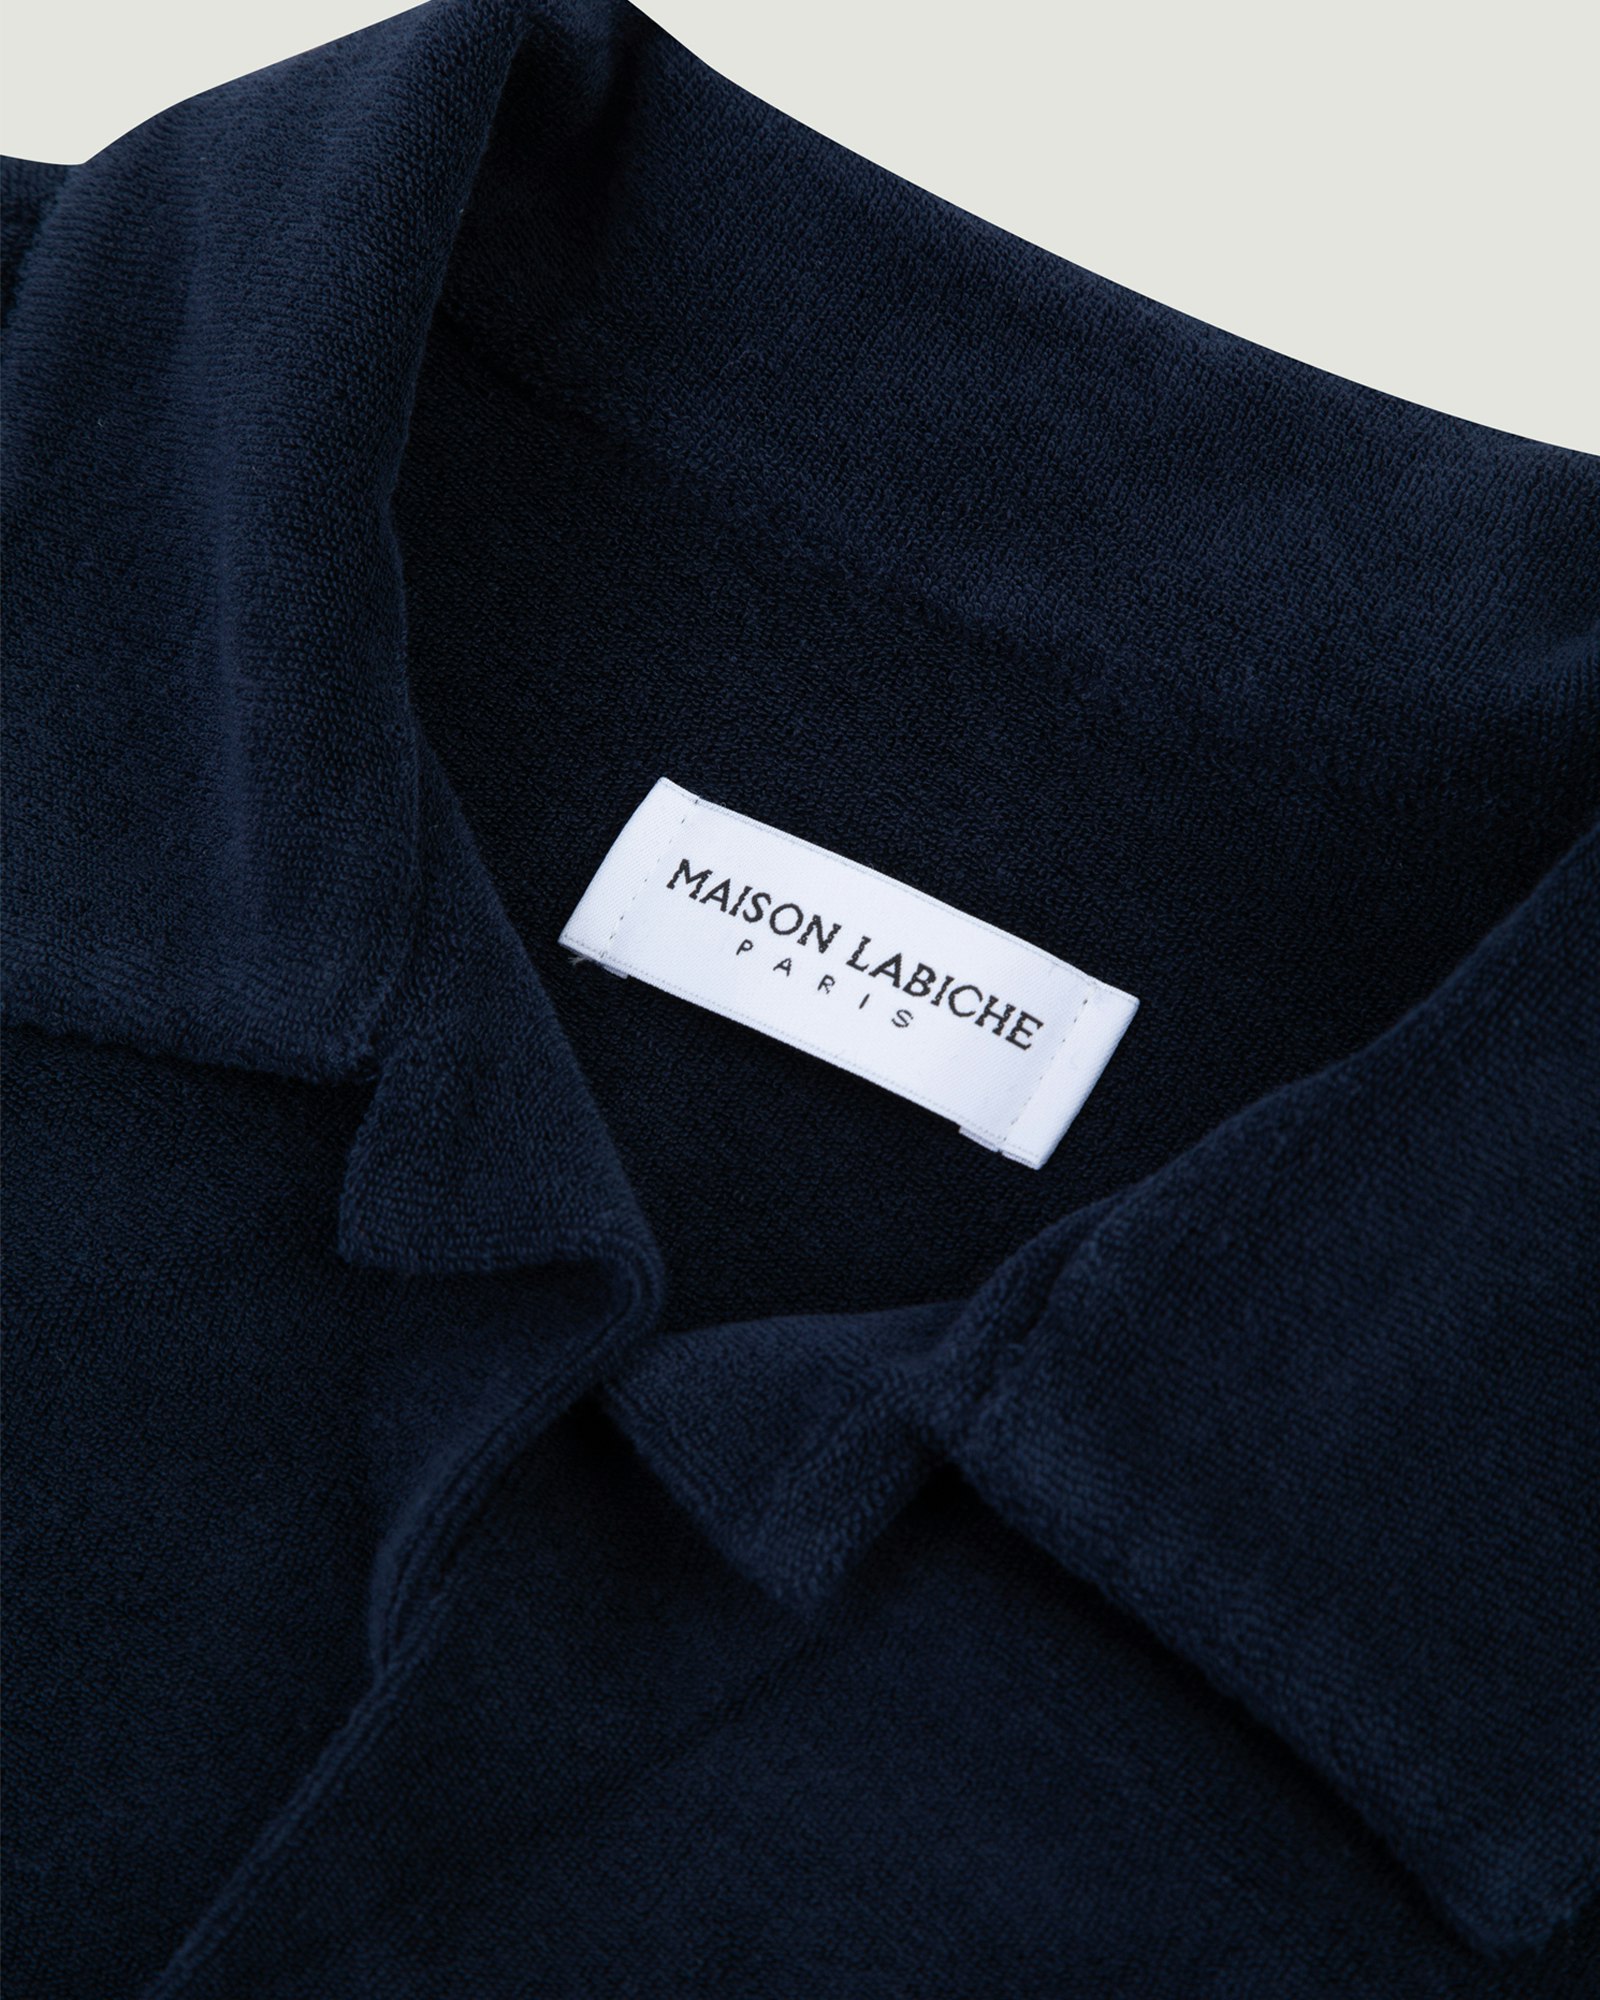 Maison Labiche - Devoured Terry Cloth Germain Shirt, Dk Navy